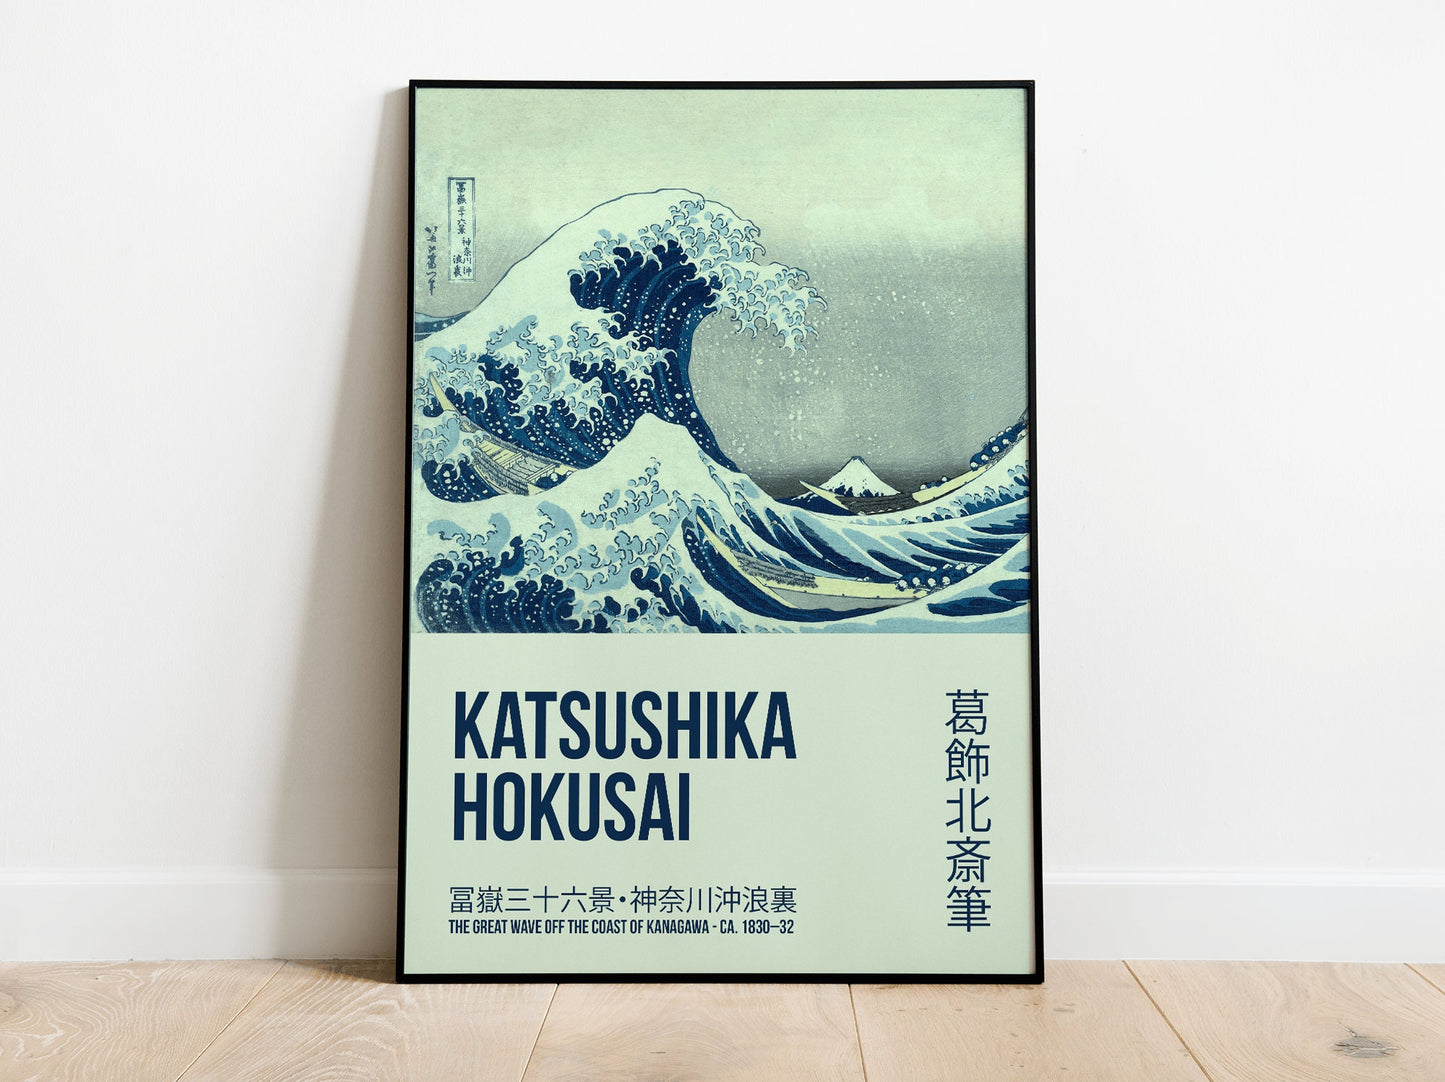 Katsushika Hokusai The Great Wave, Exhibition Poster, Japanese Poster, Japanese Art, Wall Art Decor